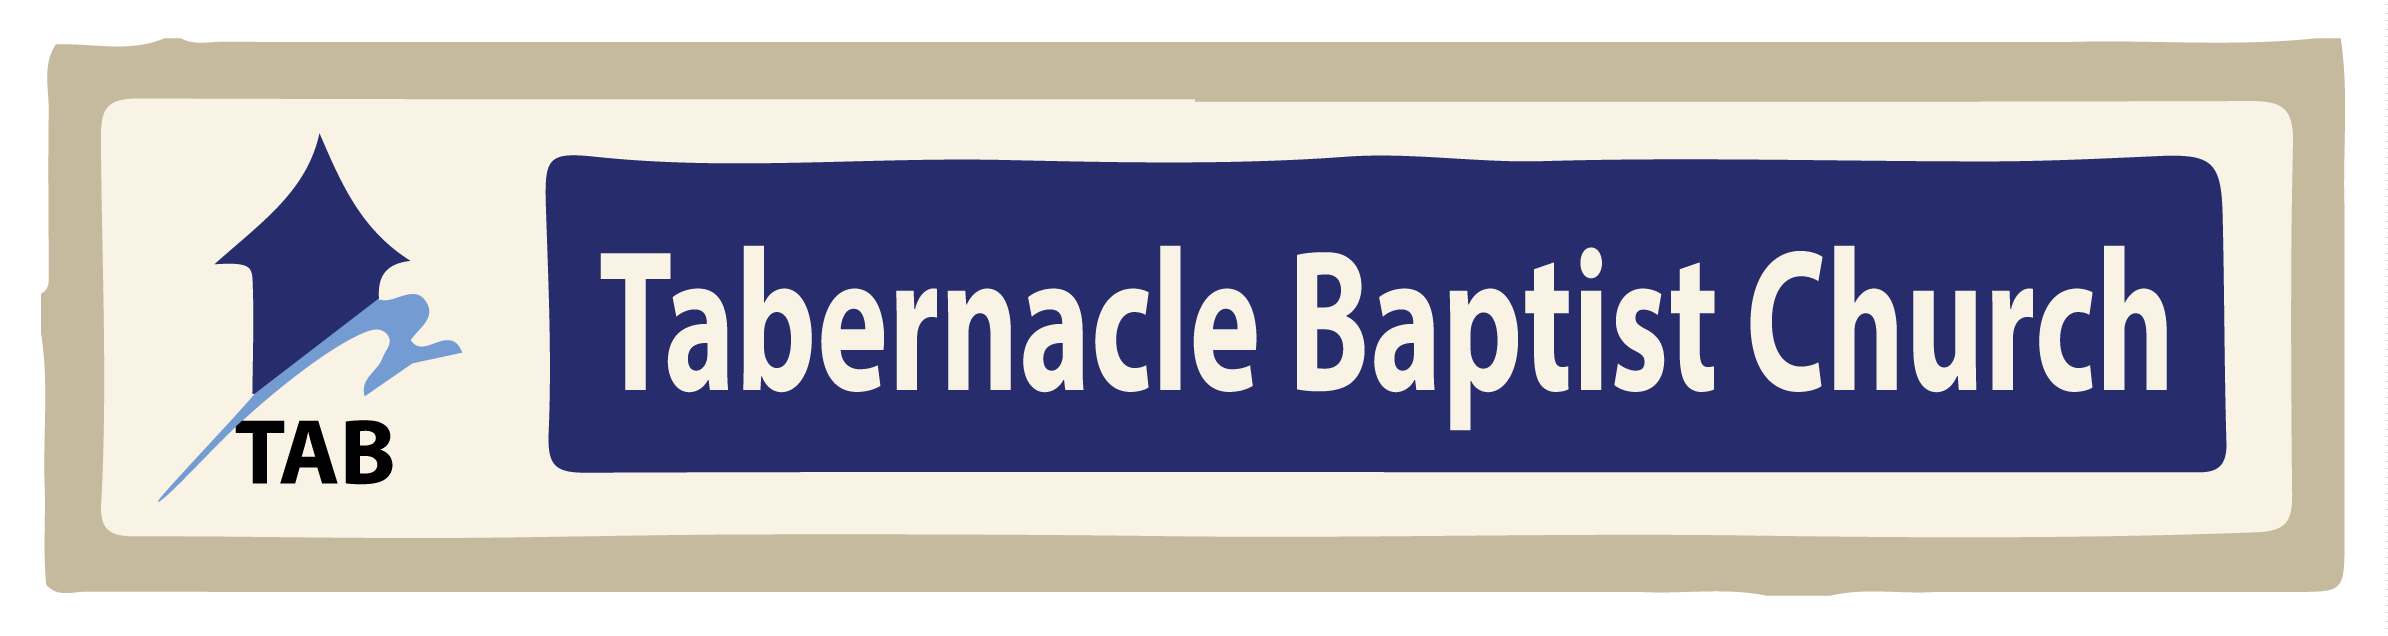 tabernacle_baptist_church.png